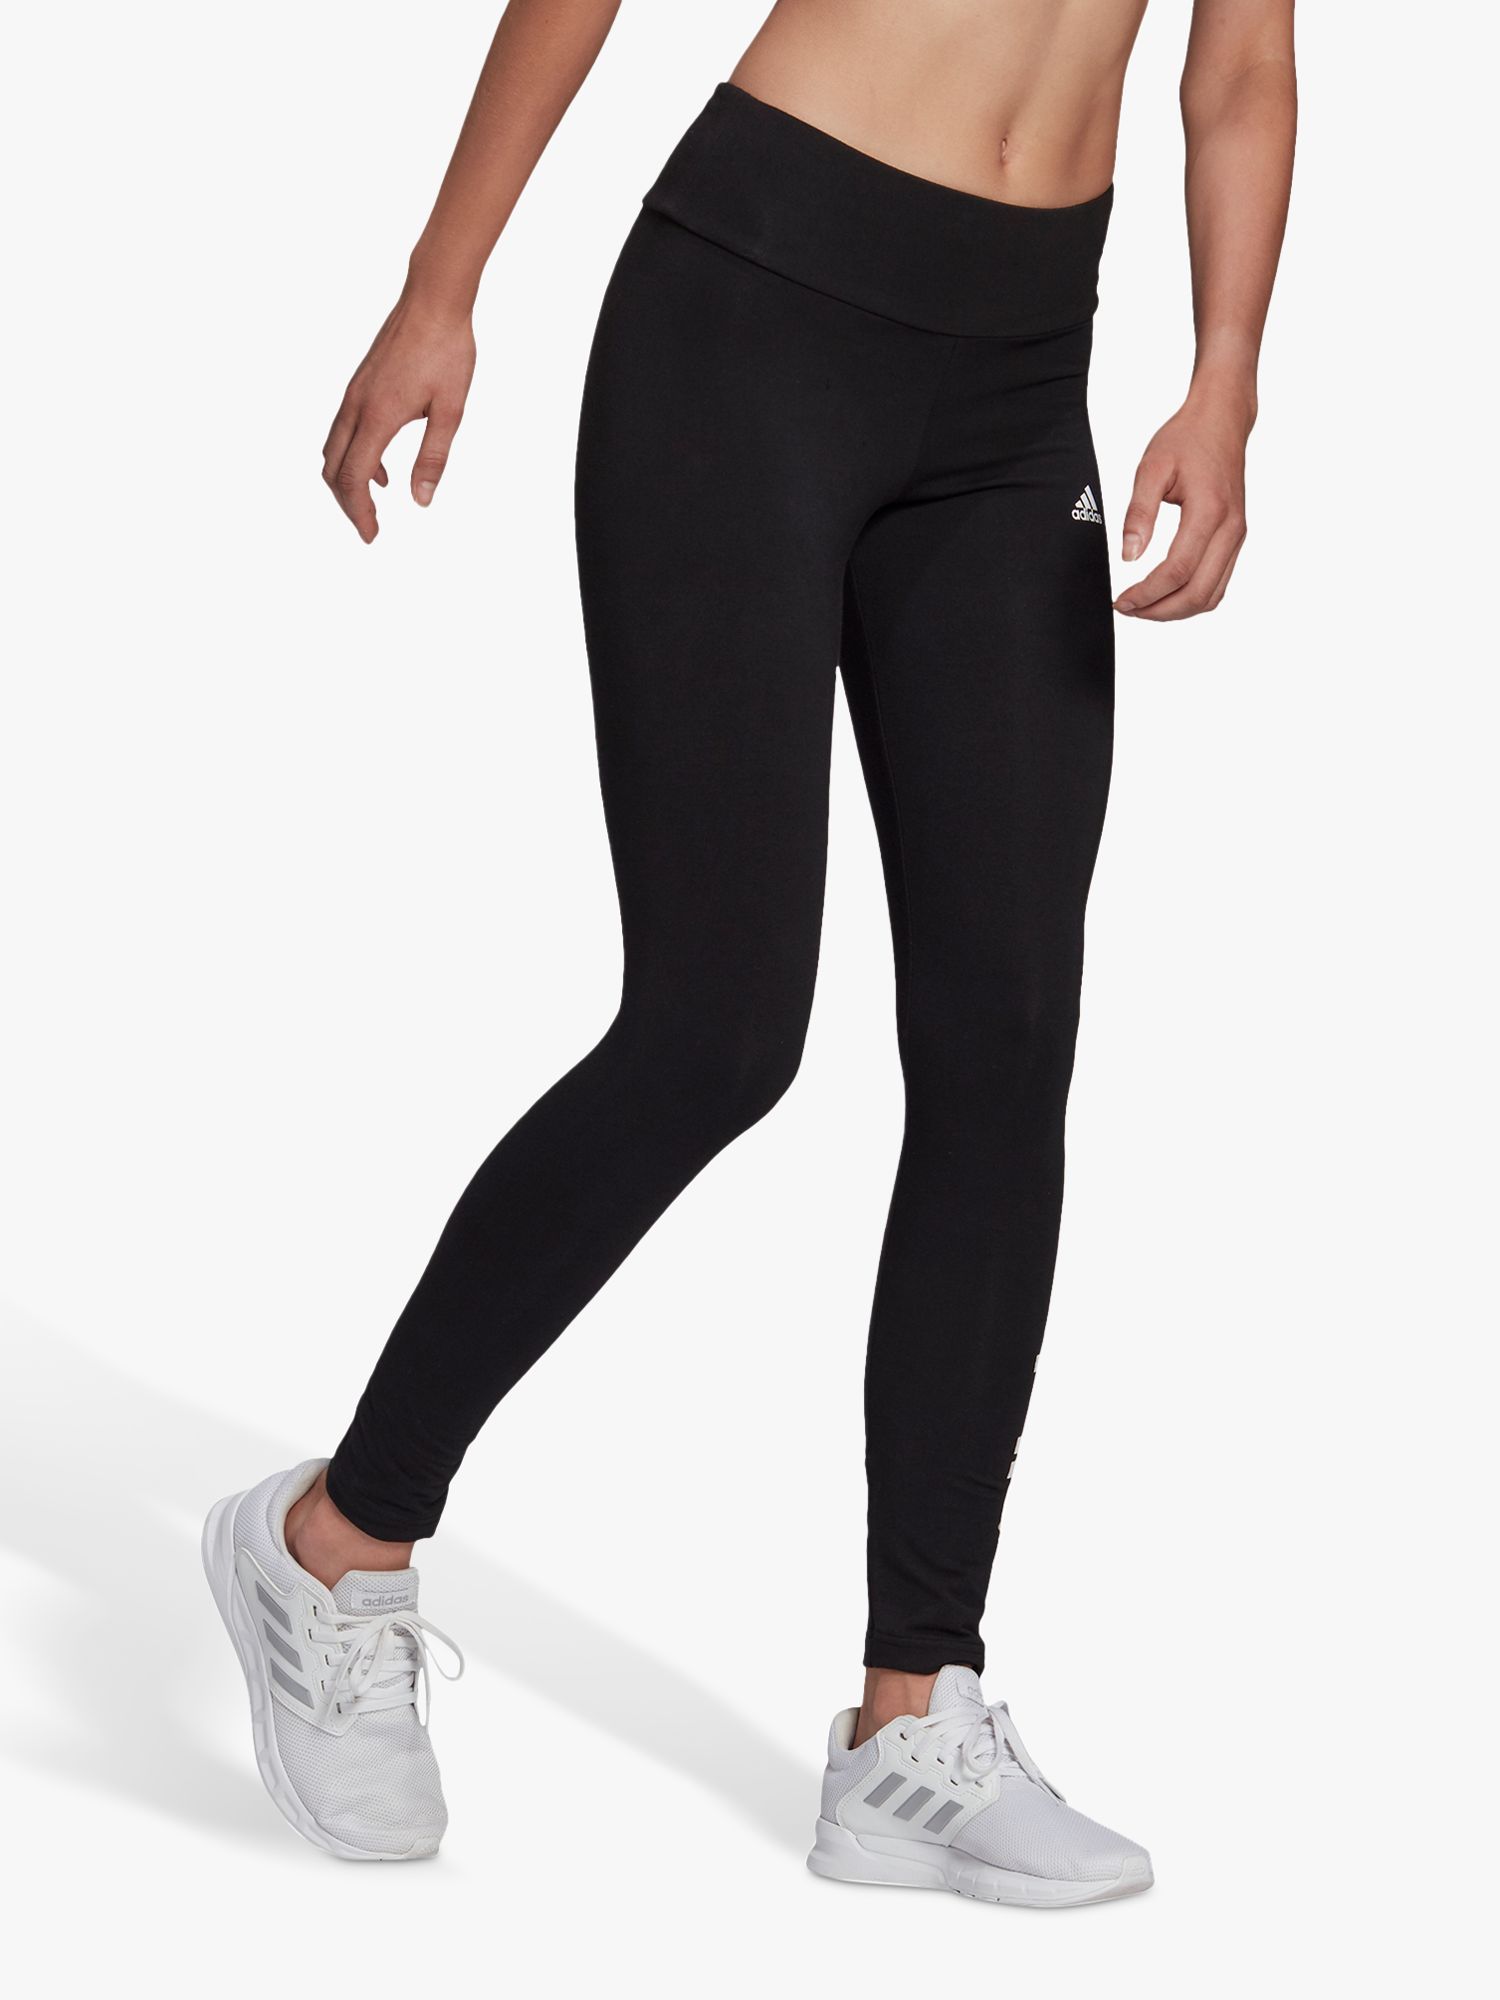 adidas LOUNGEWEAR Essentials High-Waisted Logo Leggings Women's Sizes S-XL